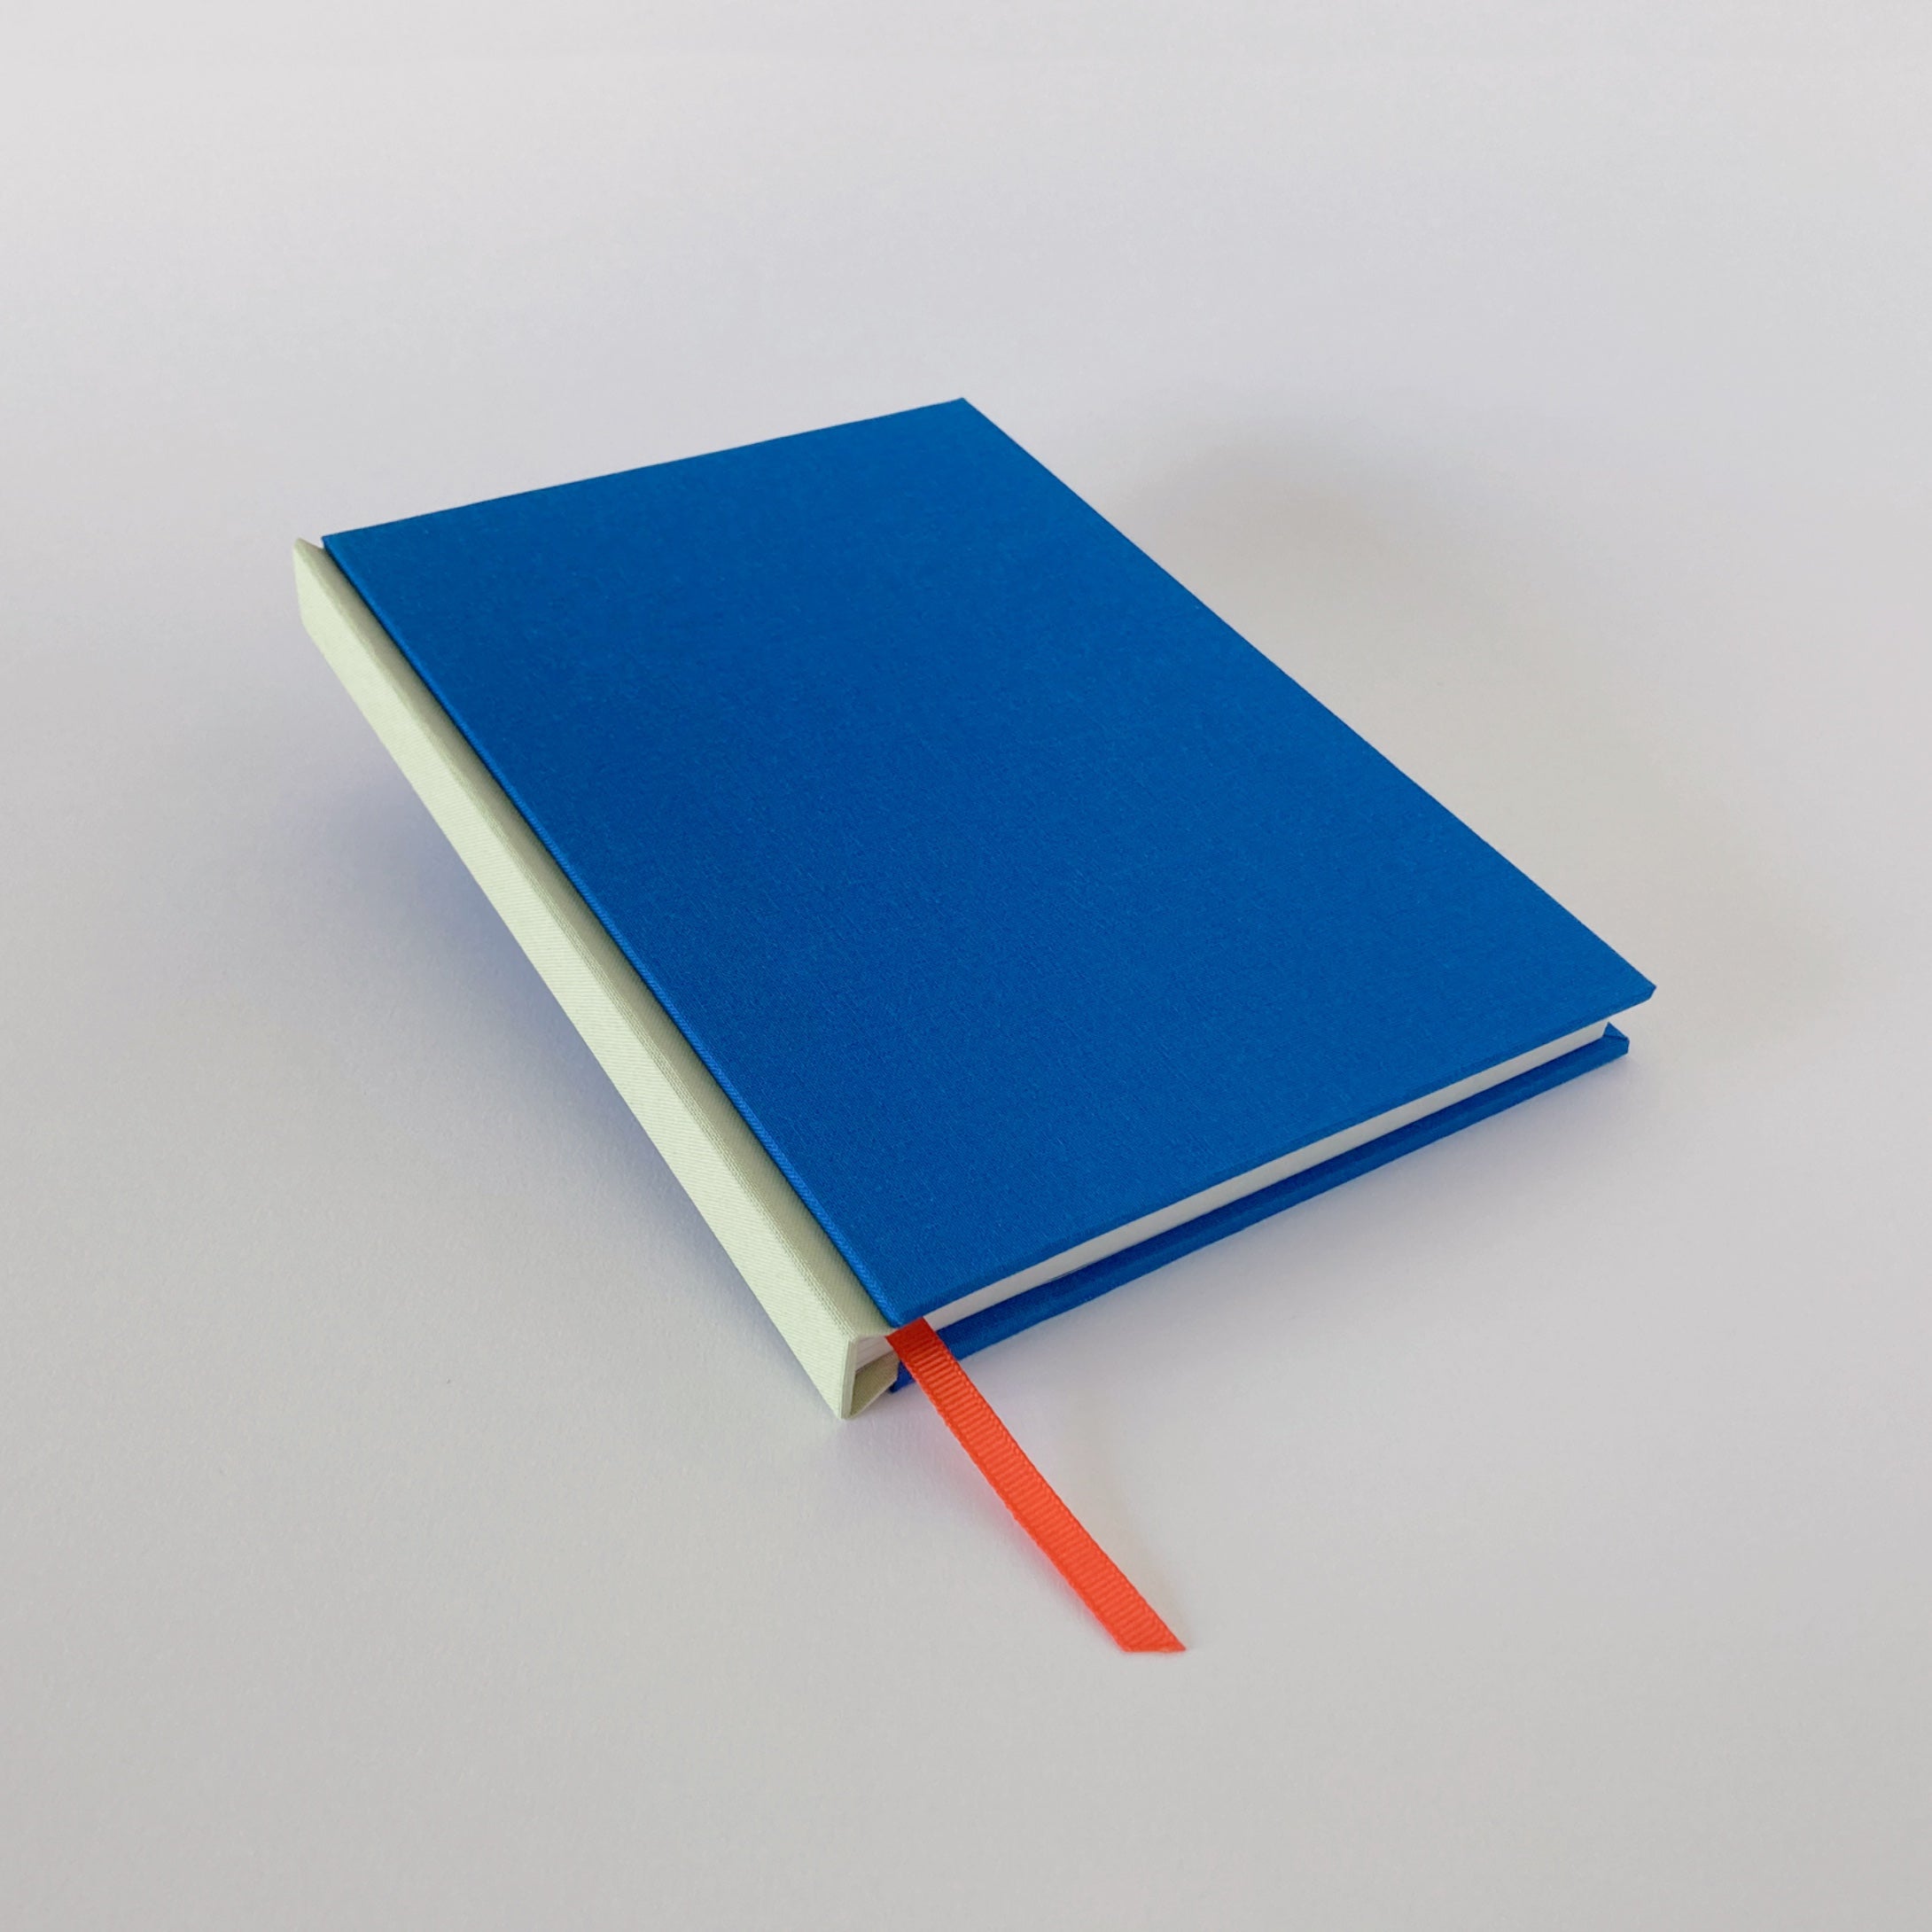 Blue clothbound sketchbook with mint spine and orange ribbon bookmark.